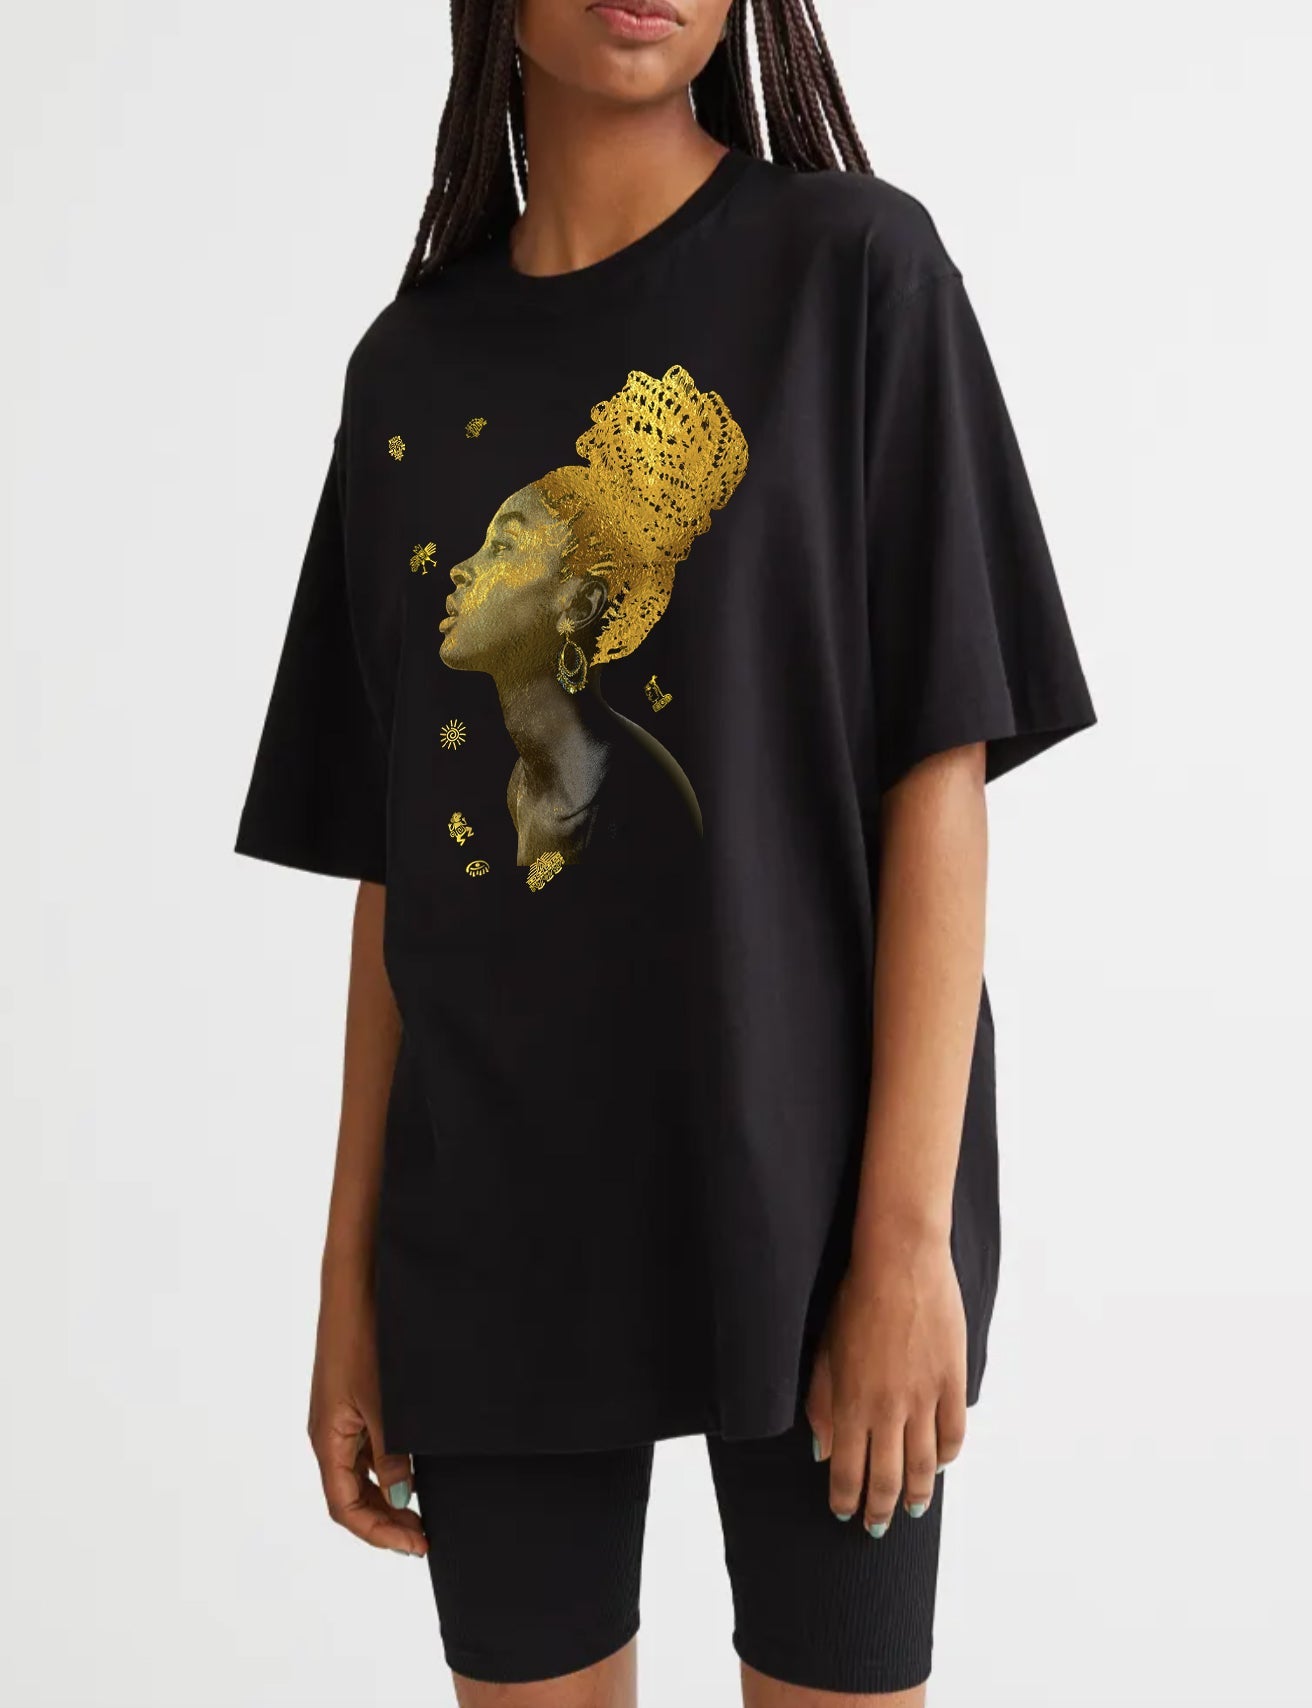 Gold African Woman Painted Premium T-shirt - EUG FASHION EugFashion 